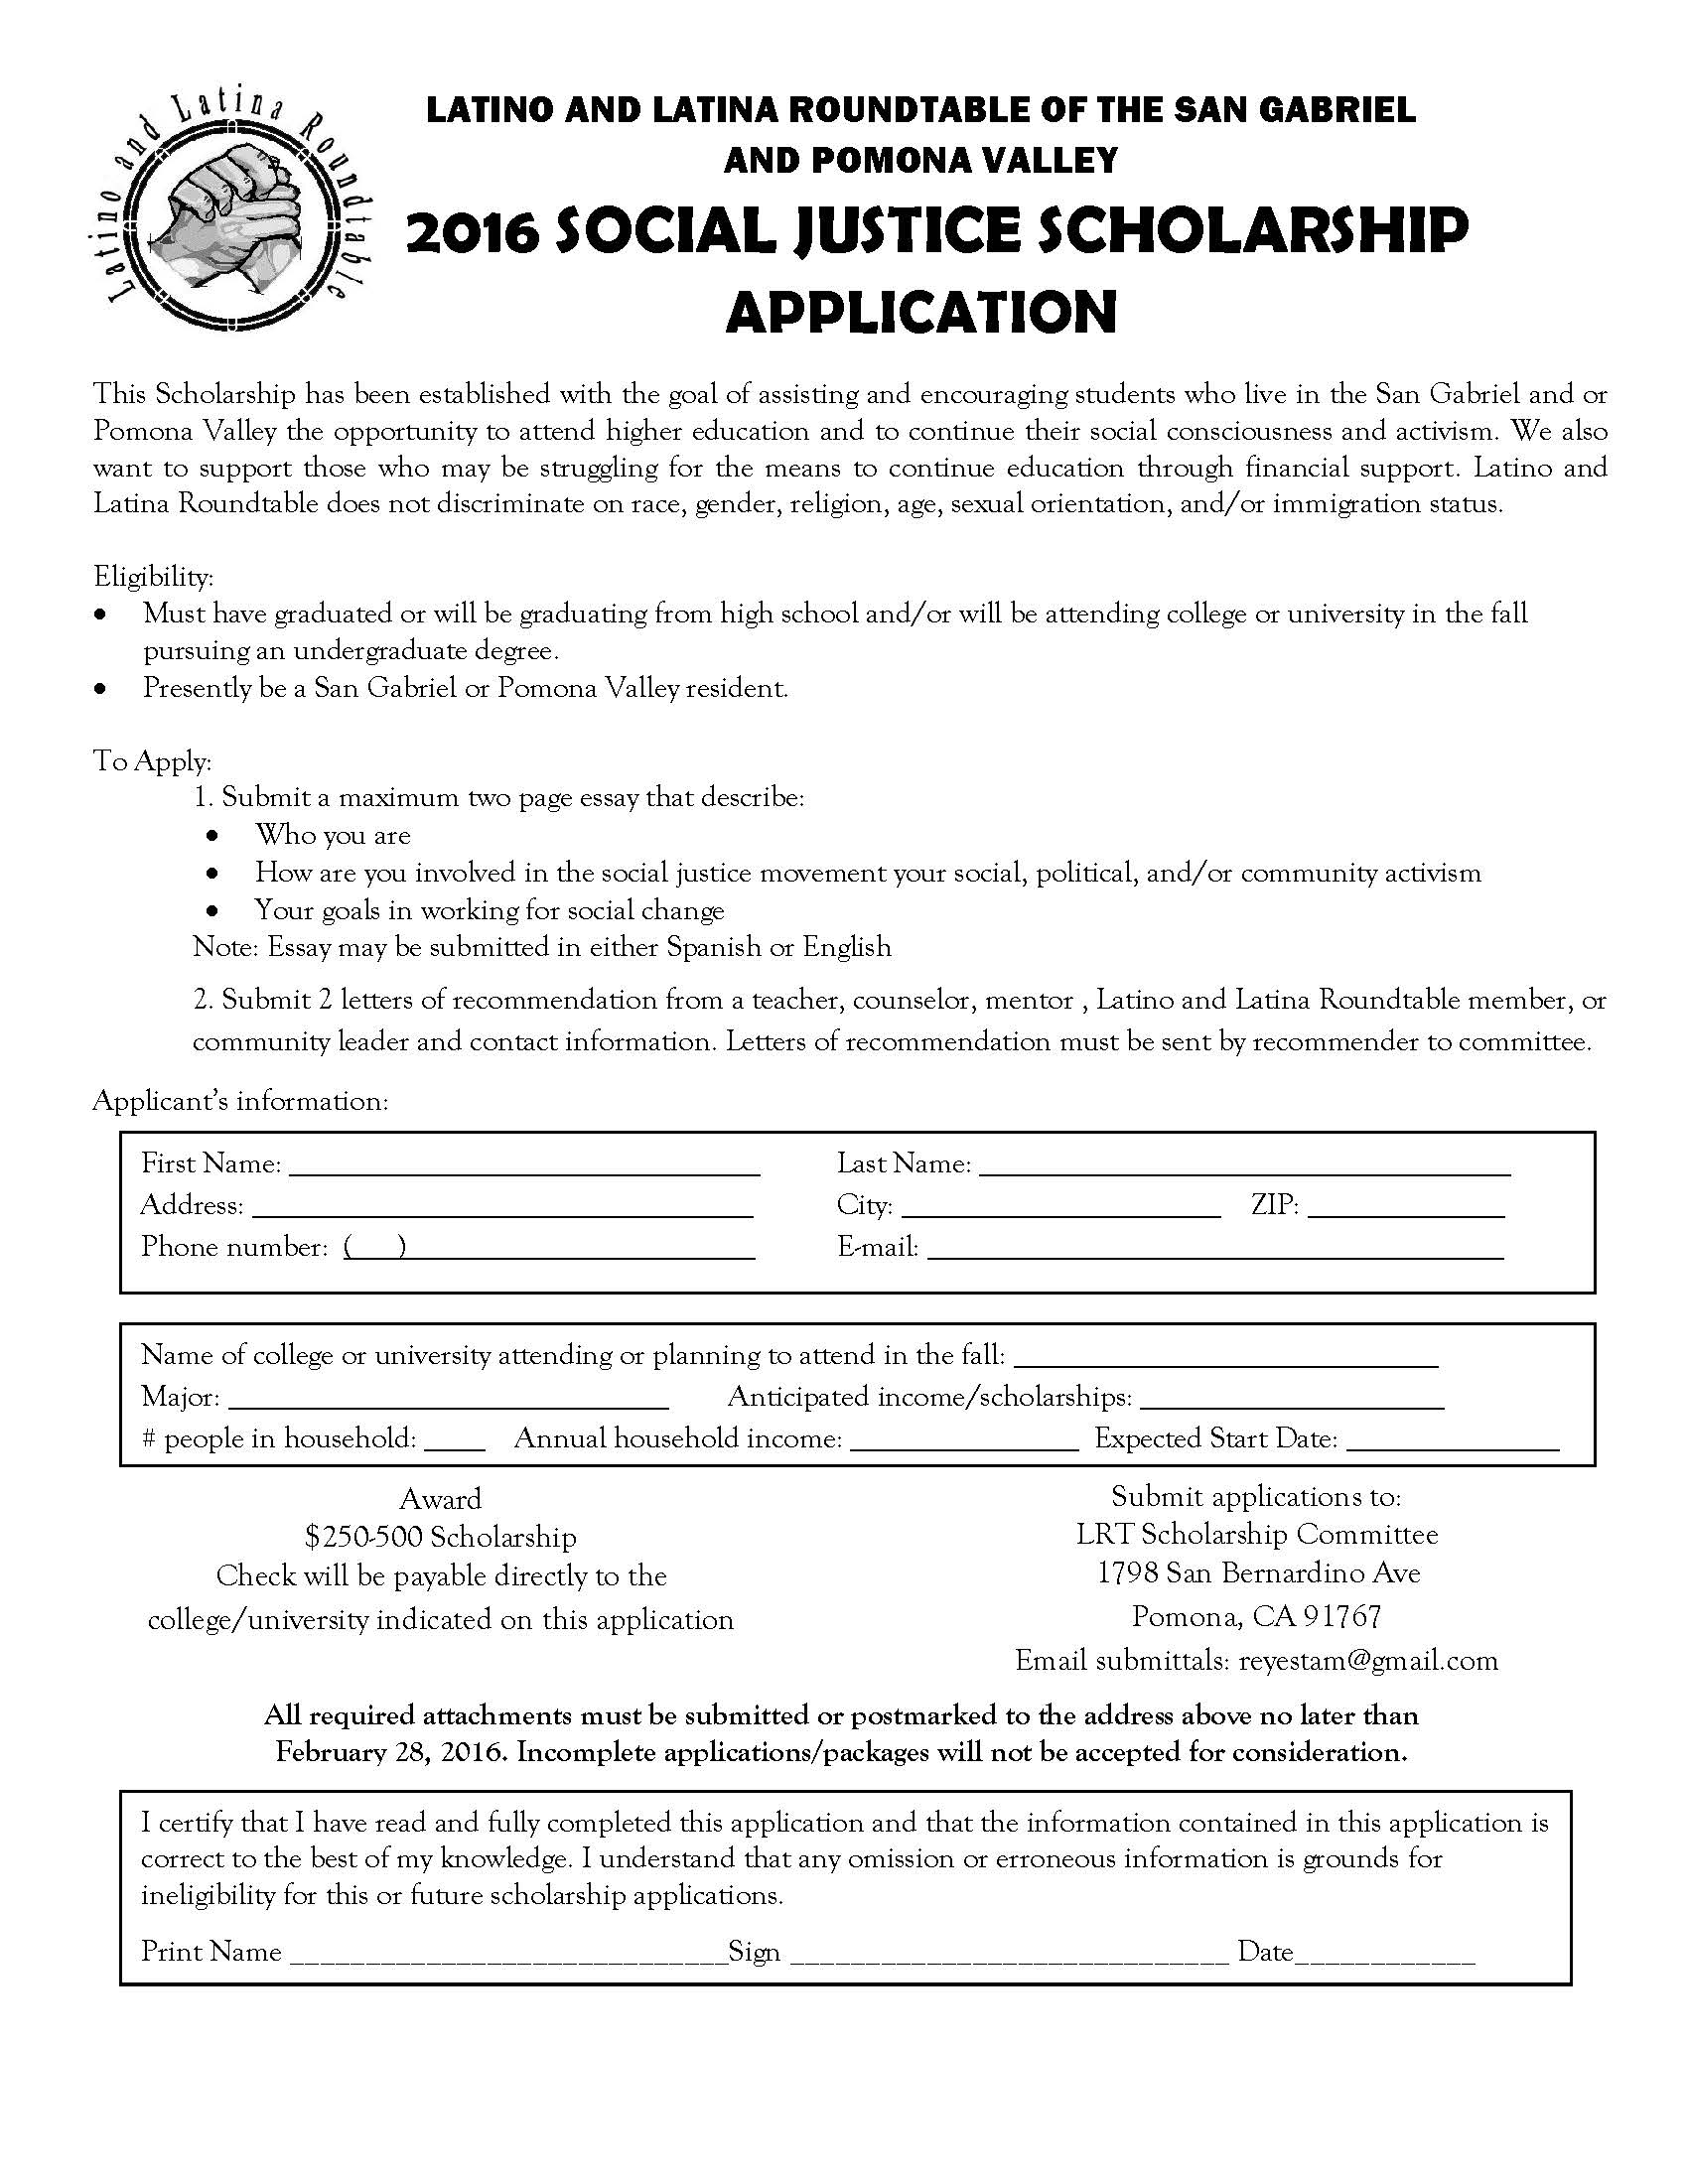 LRT Scholarship Application 2016 (1)